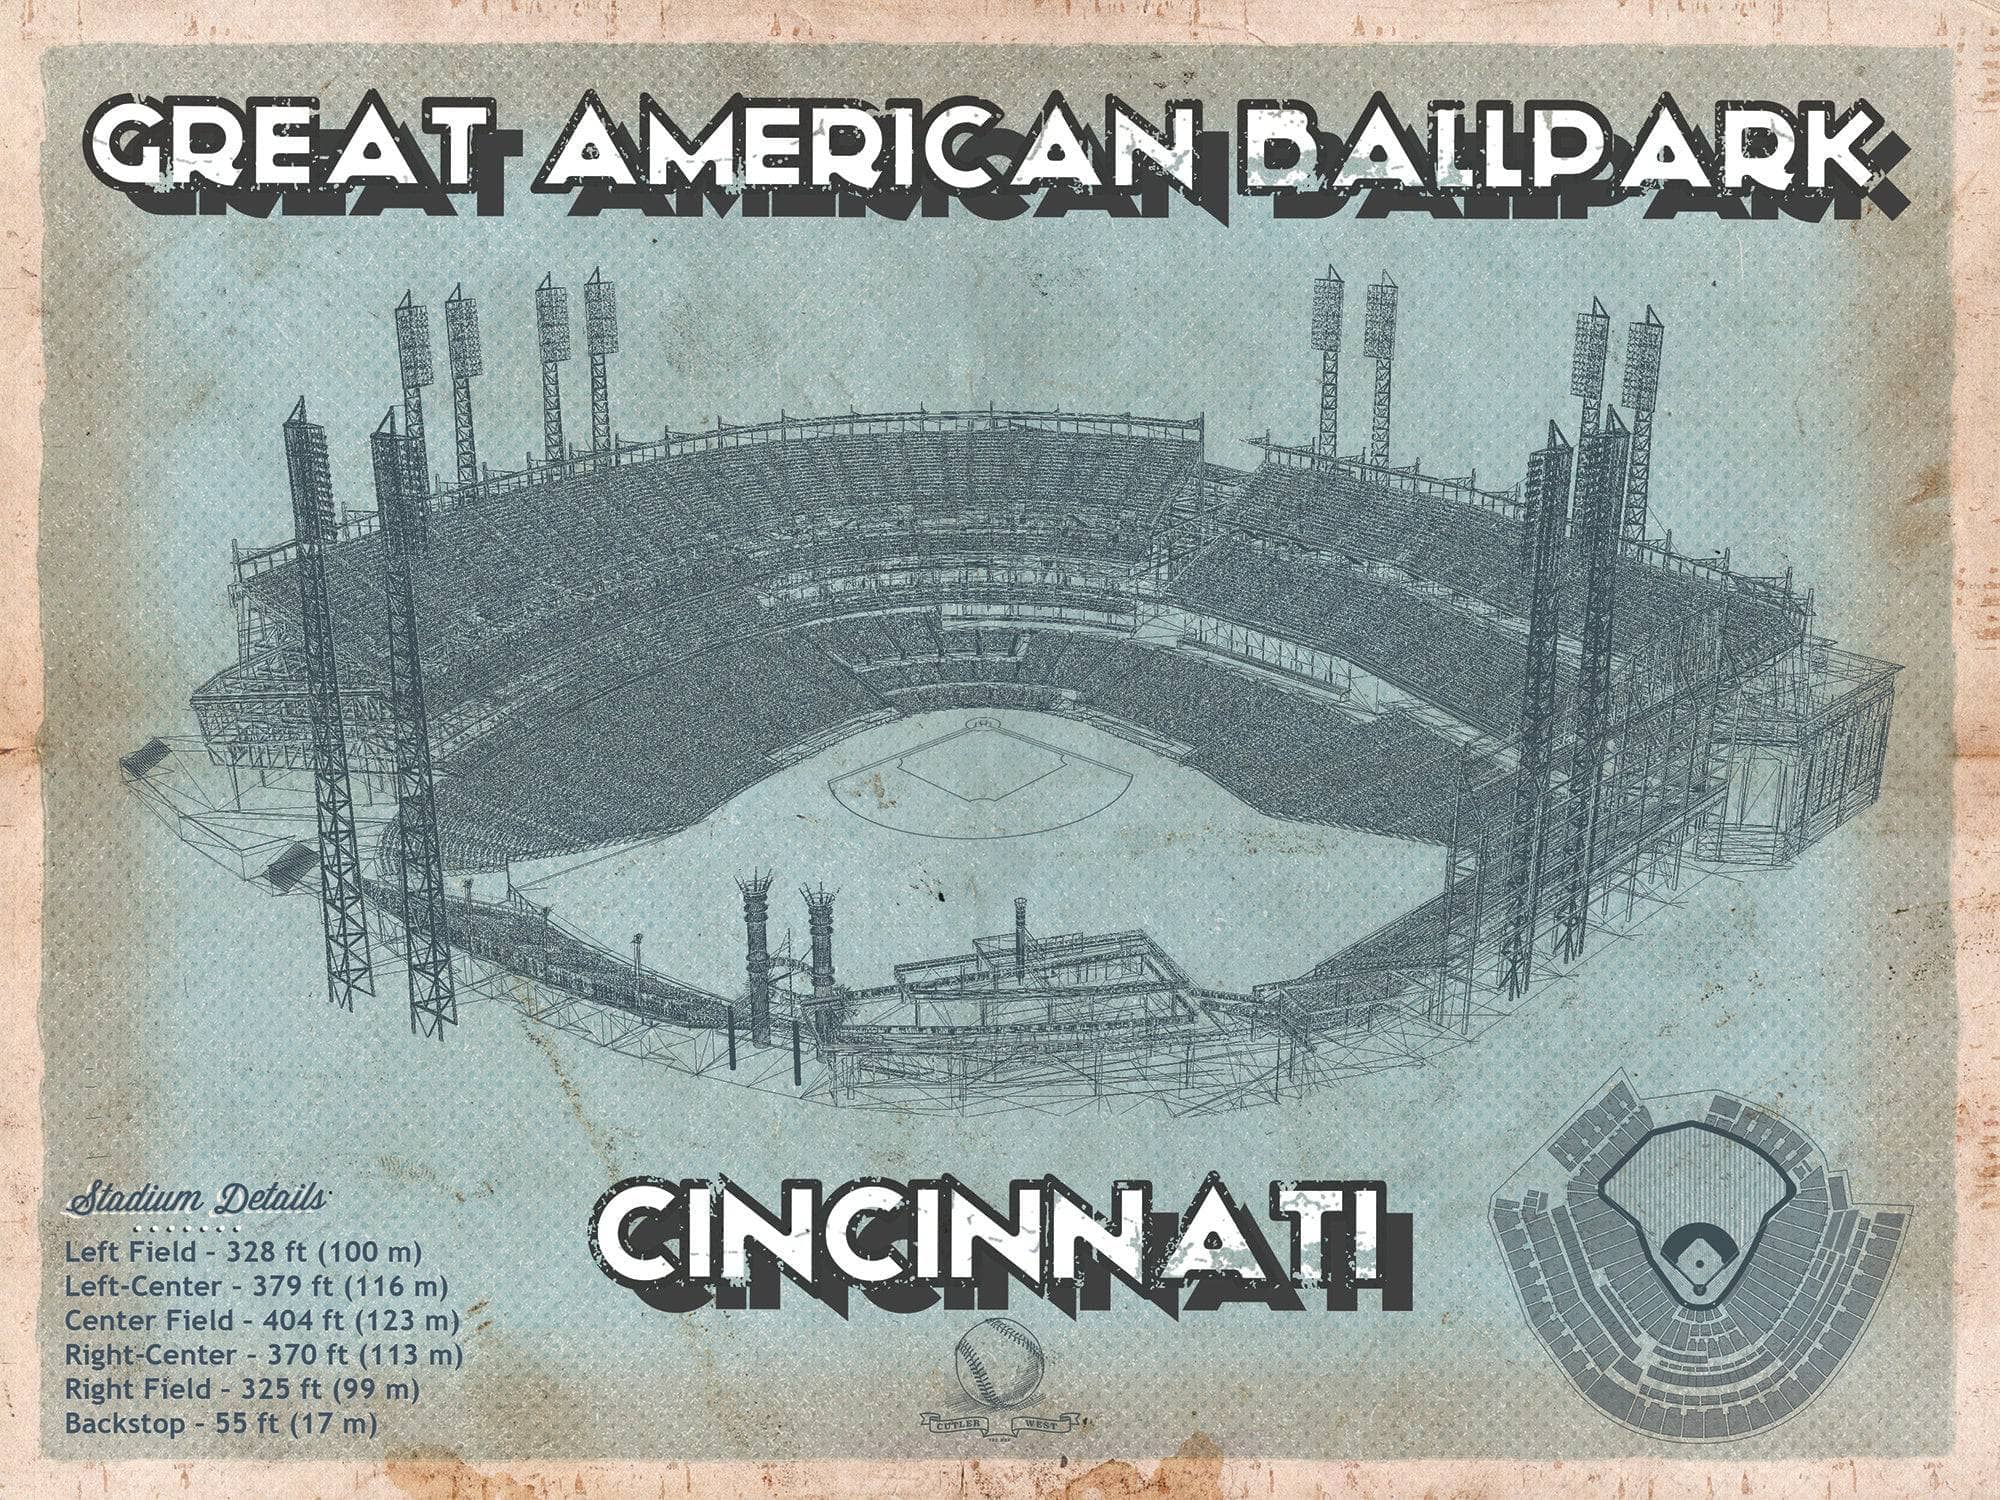 Cutler West Baseball Collection 14" x 11" / Unframed Cincinnati Reds Great American Ballpark Seating Chart - Vintage Baseball Fan Print 694504919-TOP